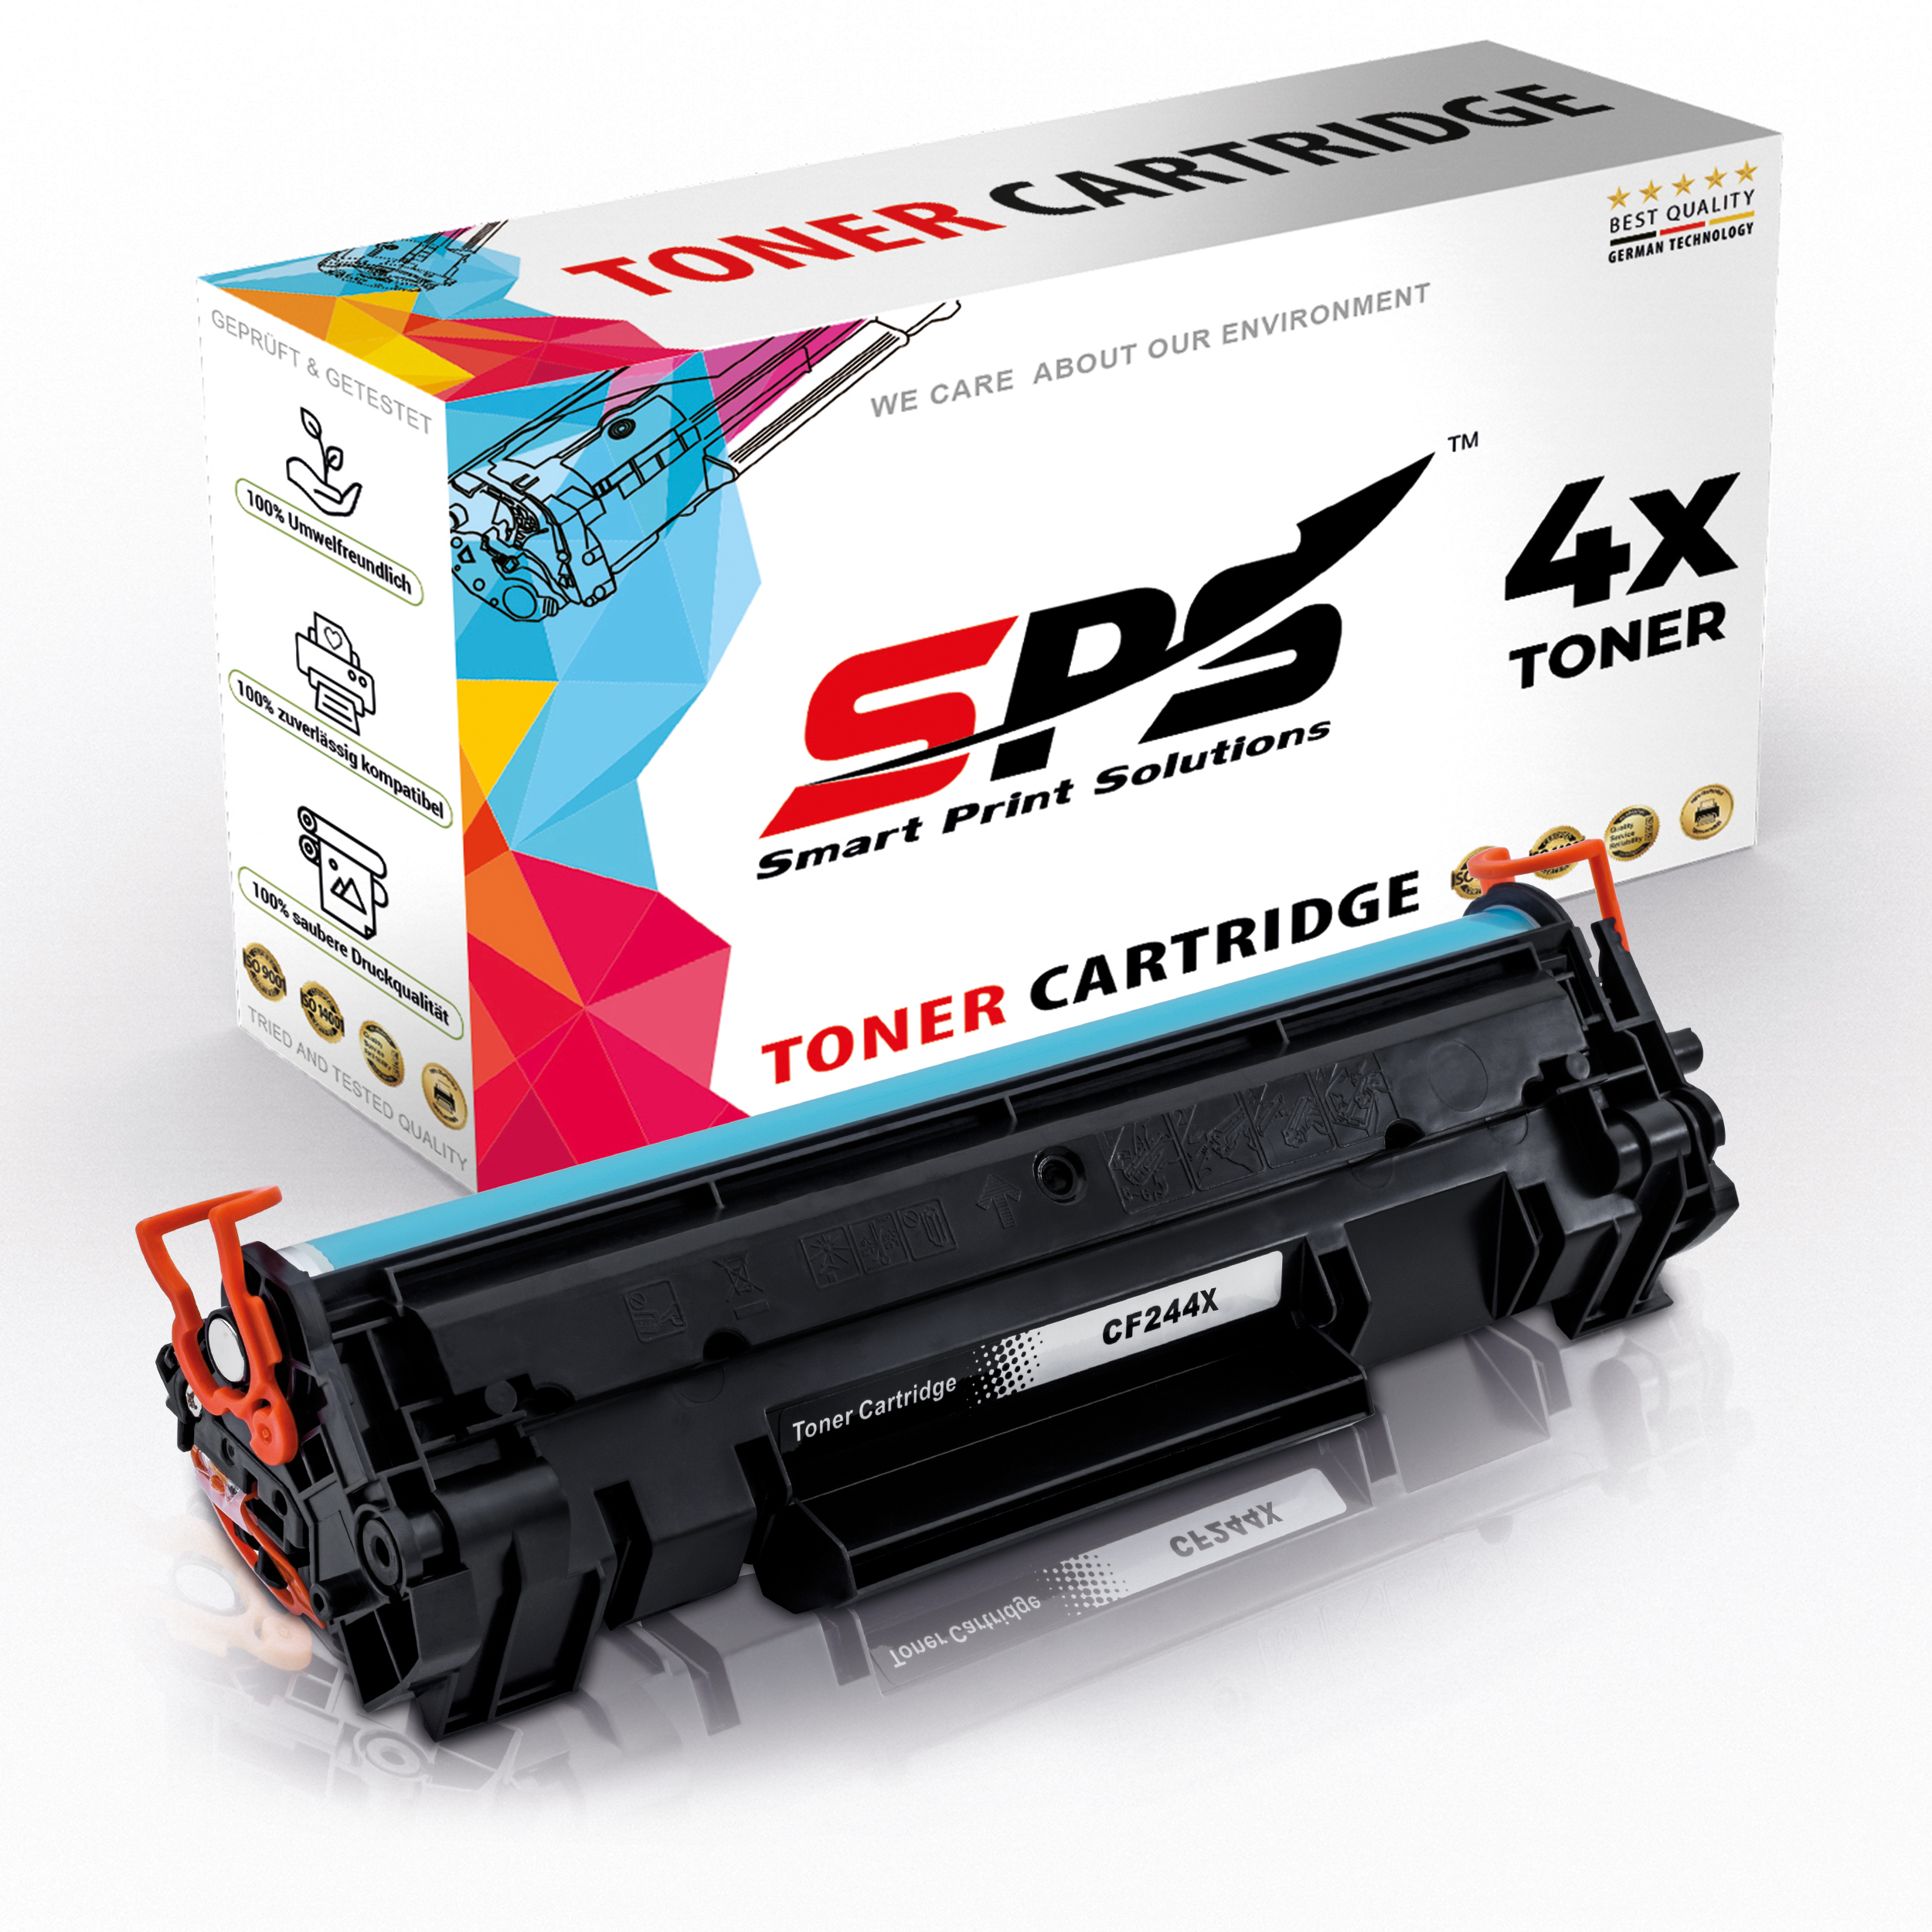 SPS S-11501 Toner Pro MFP / Schwarz (44X M30W) CF244X Laserjet